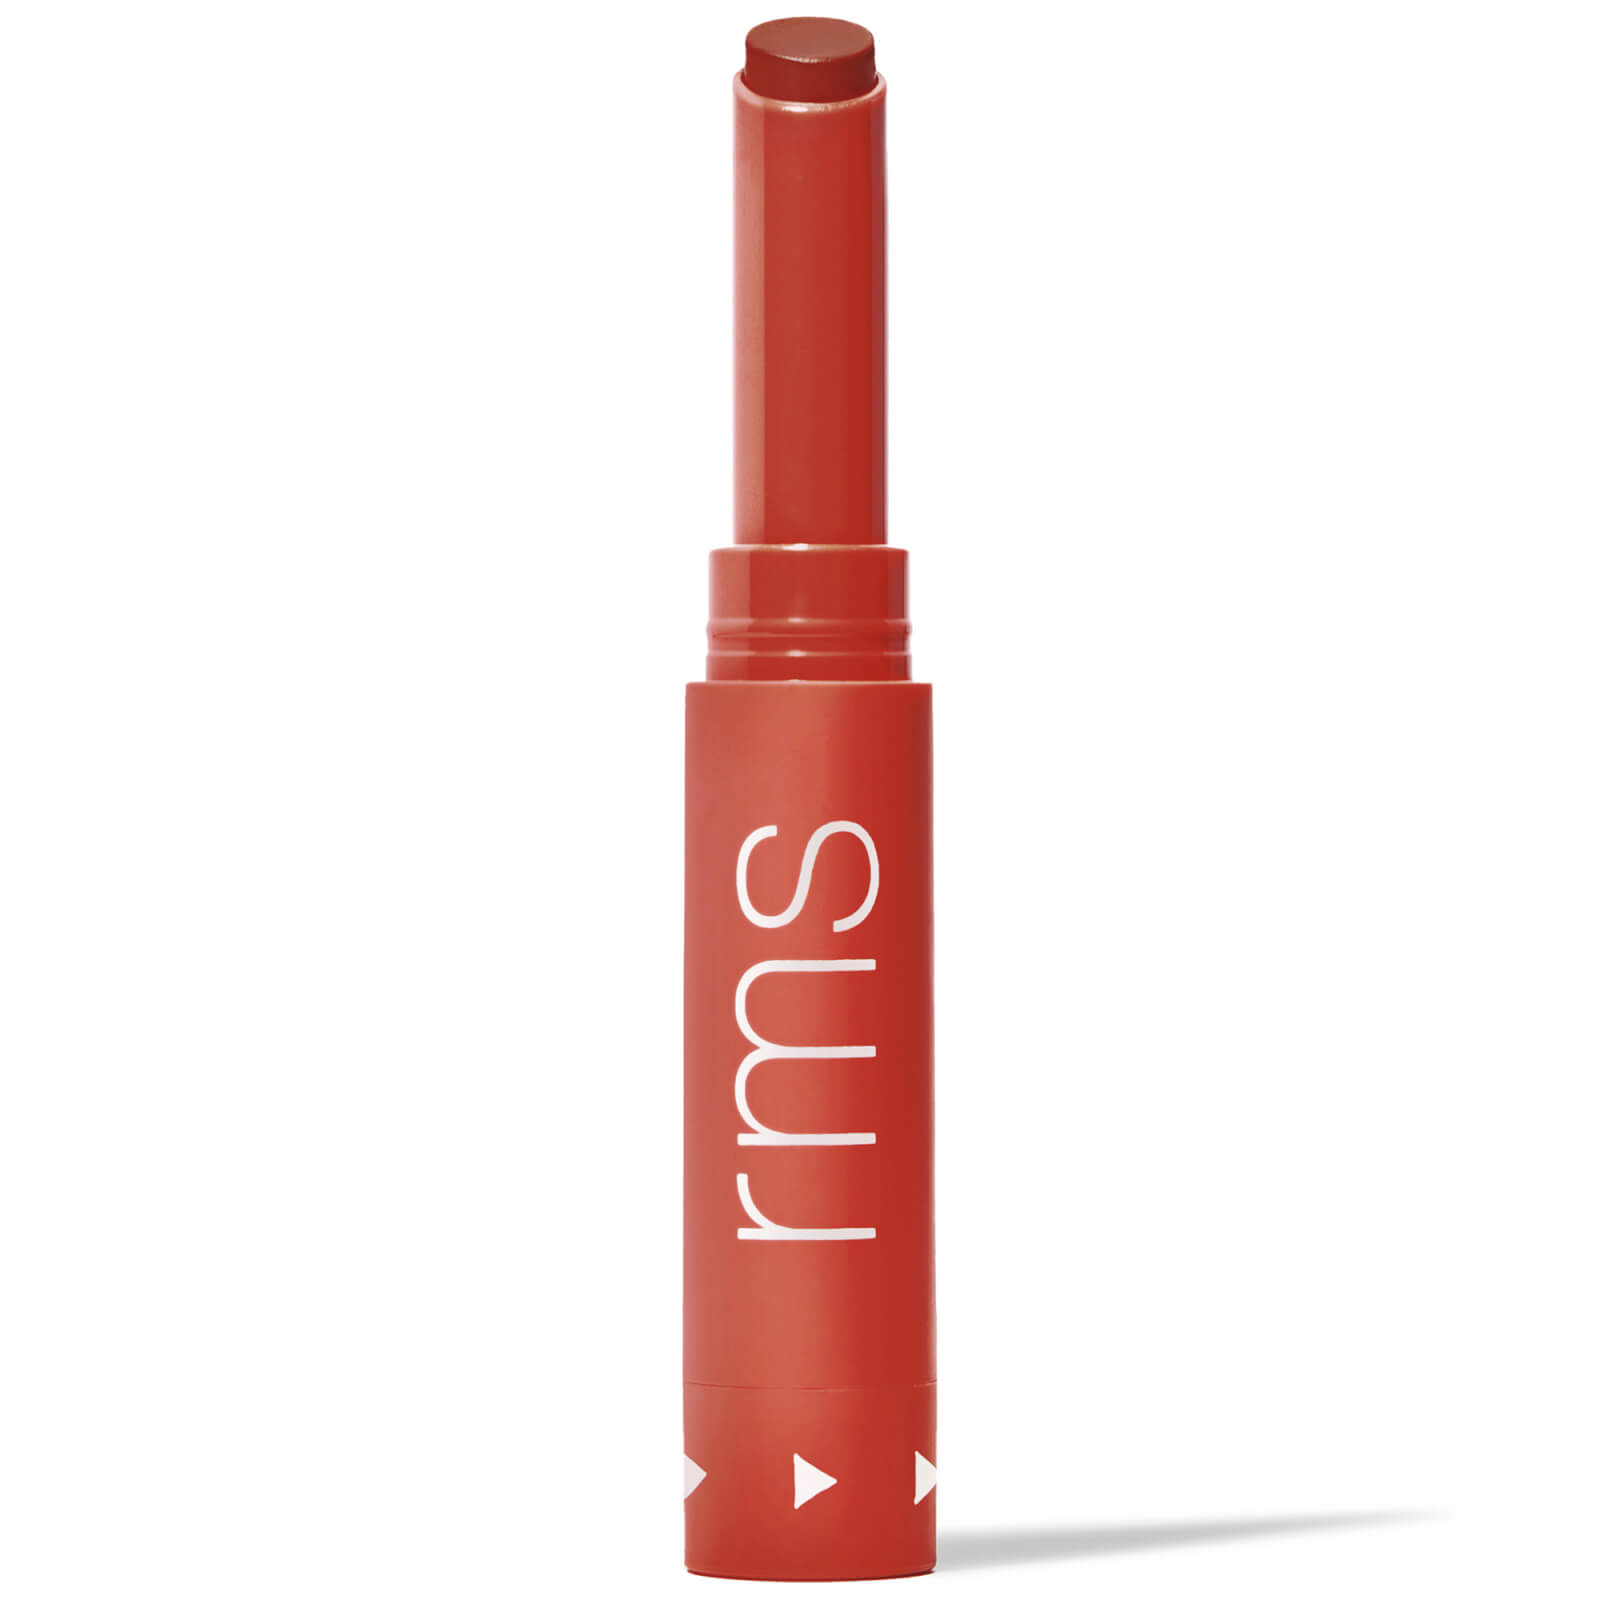 Rms Beauty Legendary Serum Lipstick 21g (various Shades) In Linda